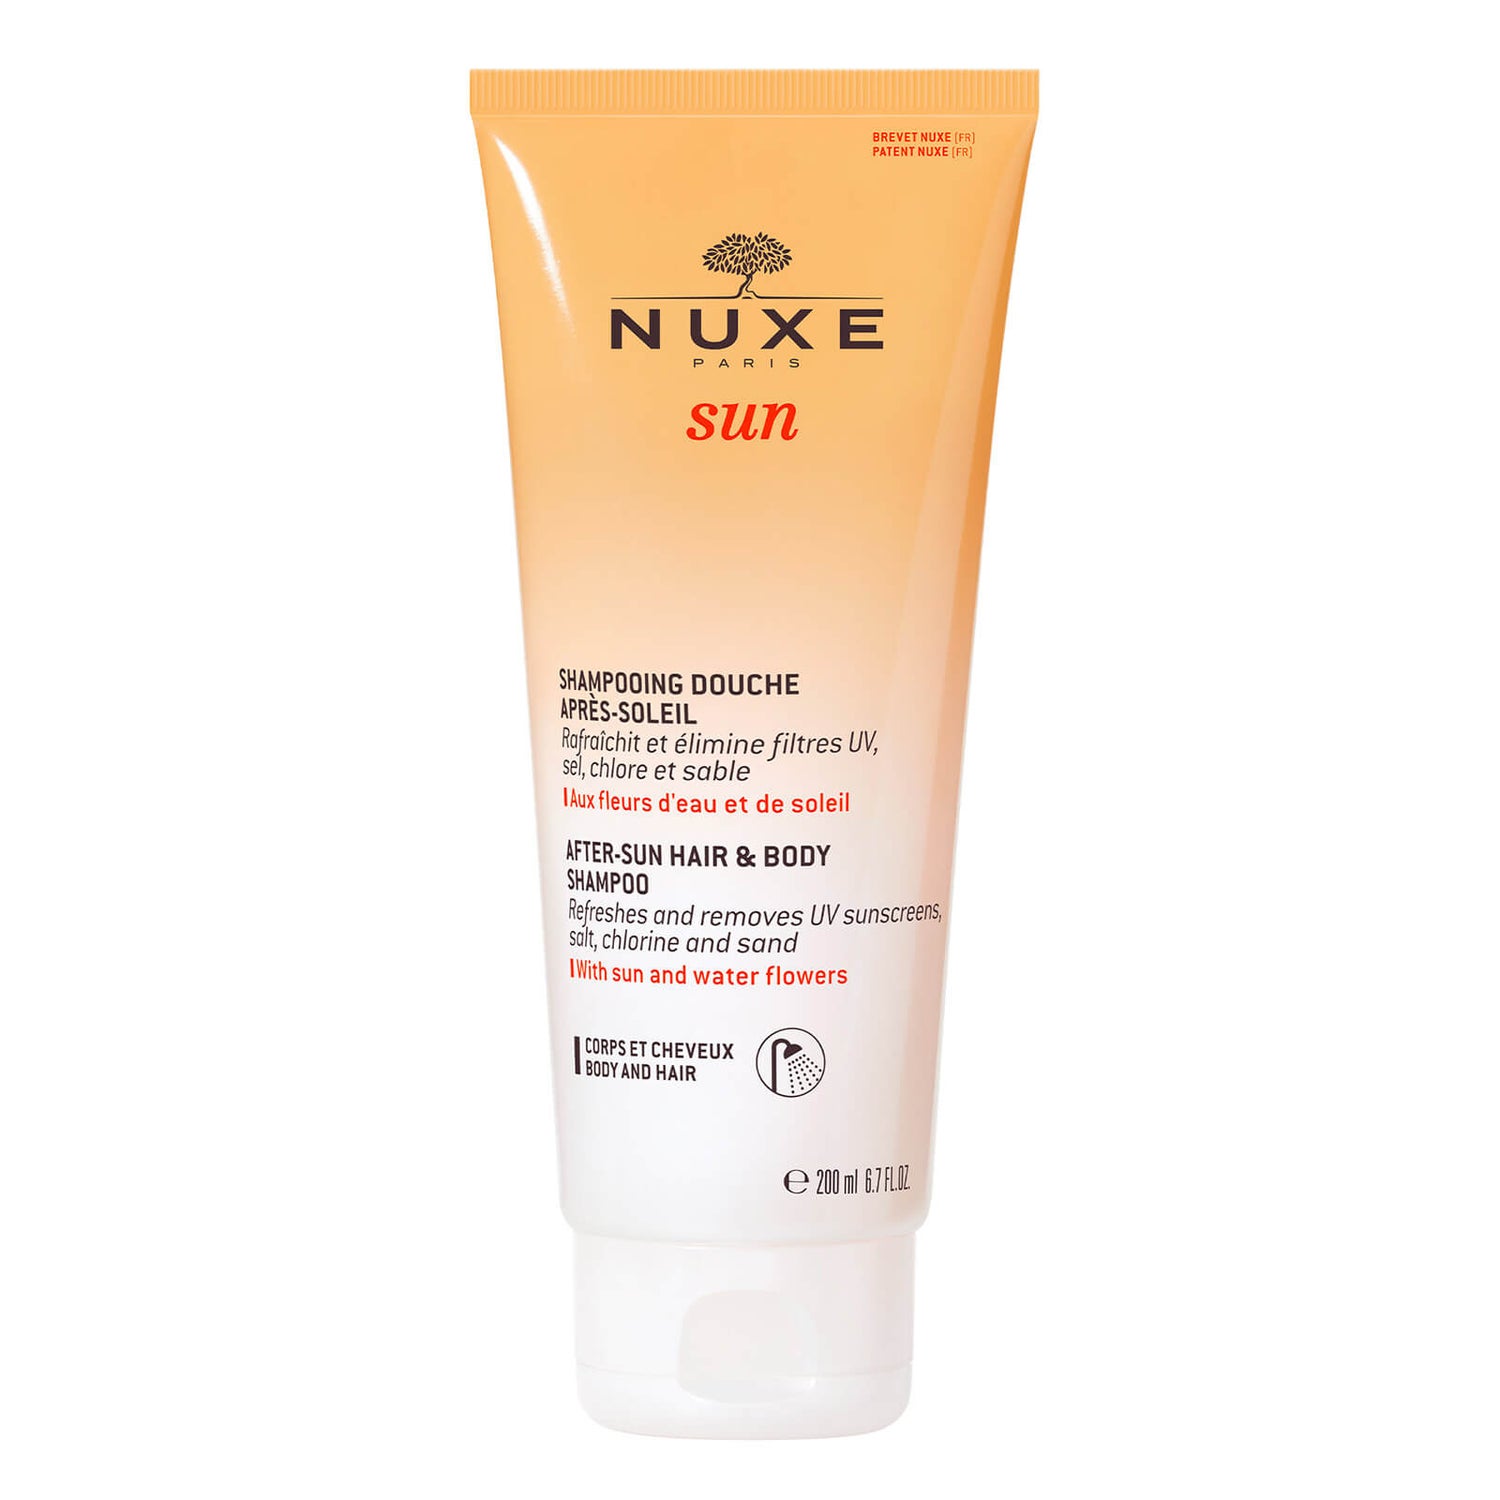 Shampooing douche après-soleil, NUXE Sun 200 ml